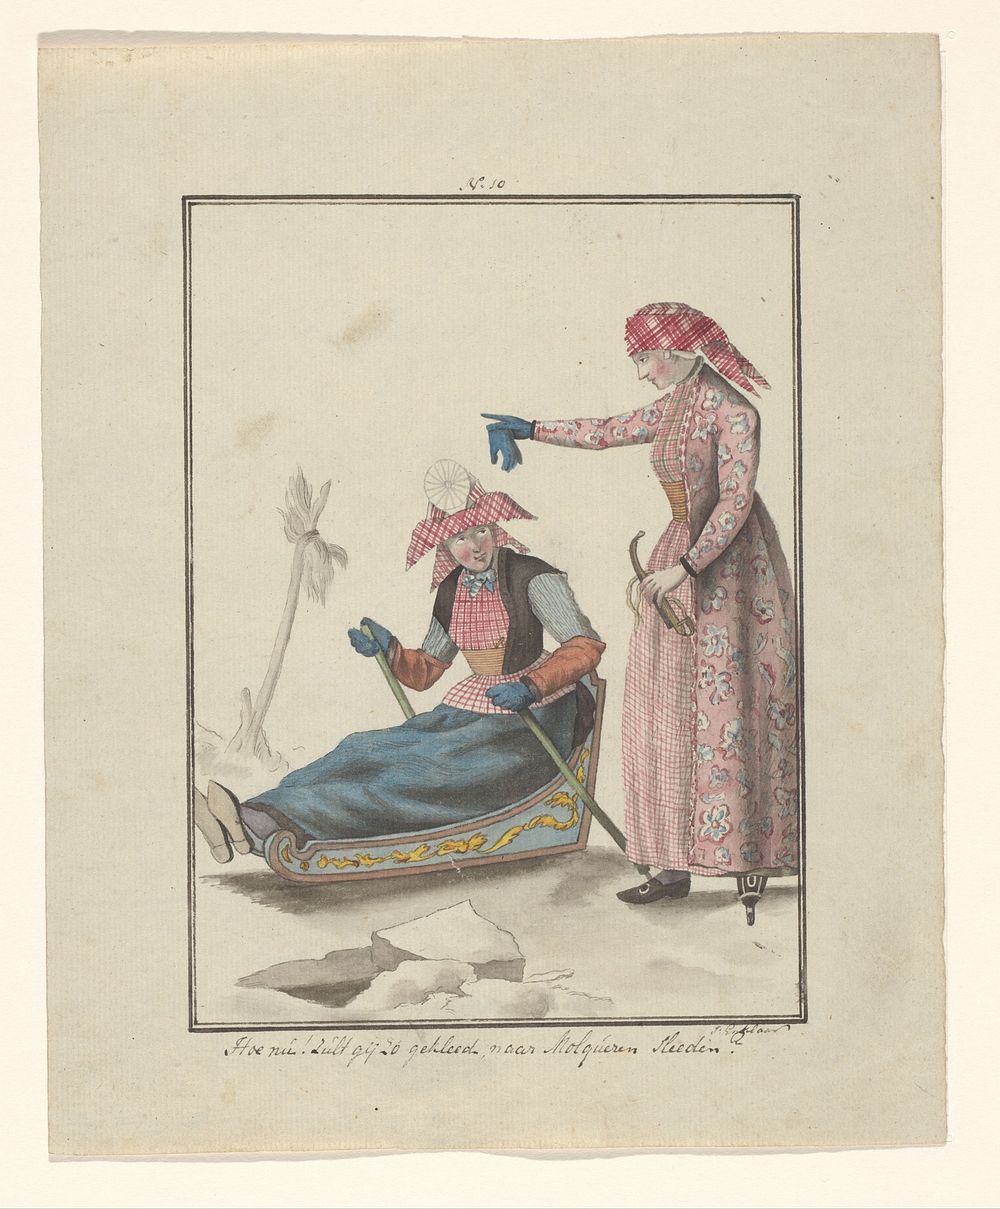 Friese vrouwen op het ijs (in or after 1803 - c. 1899) by J Enklaar, Ludwig Gottlieb Portman and C F Bounach